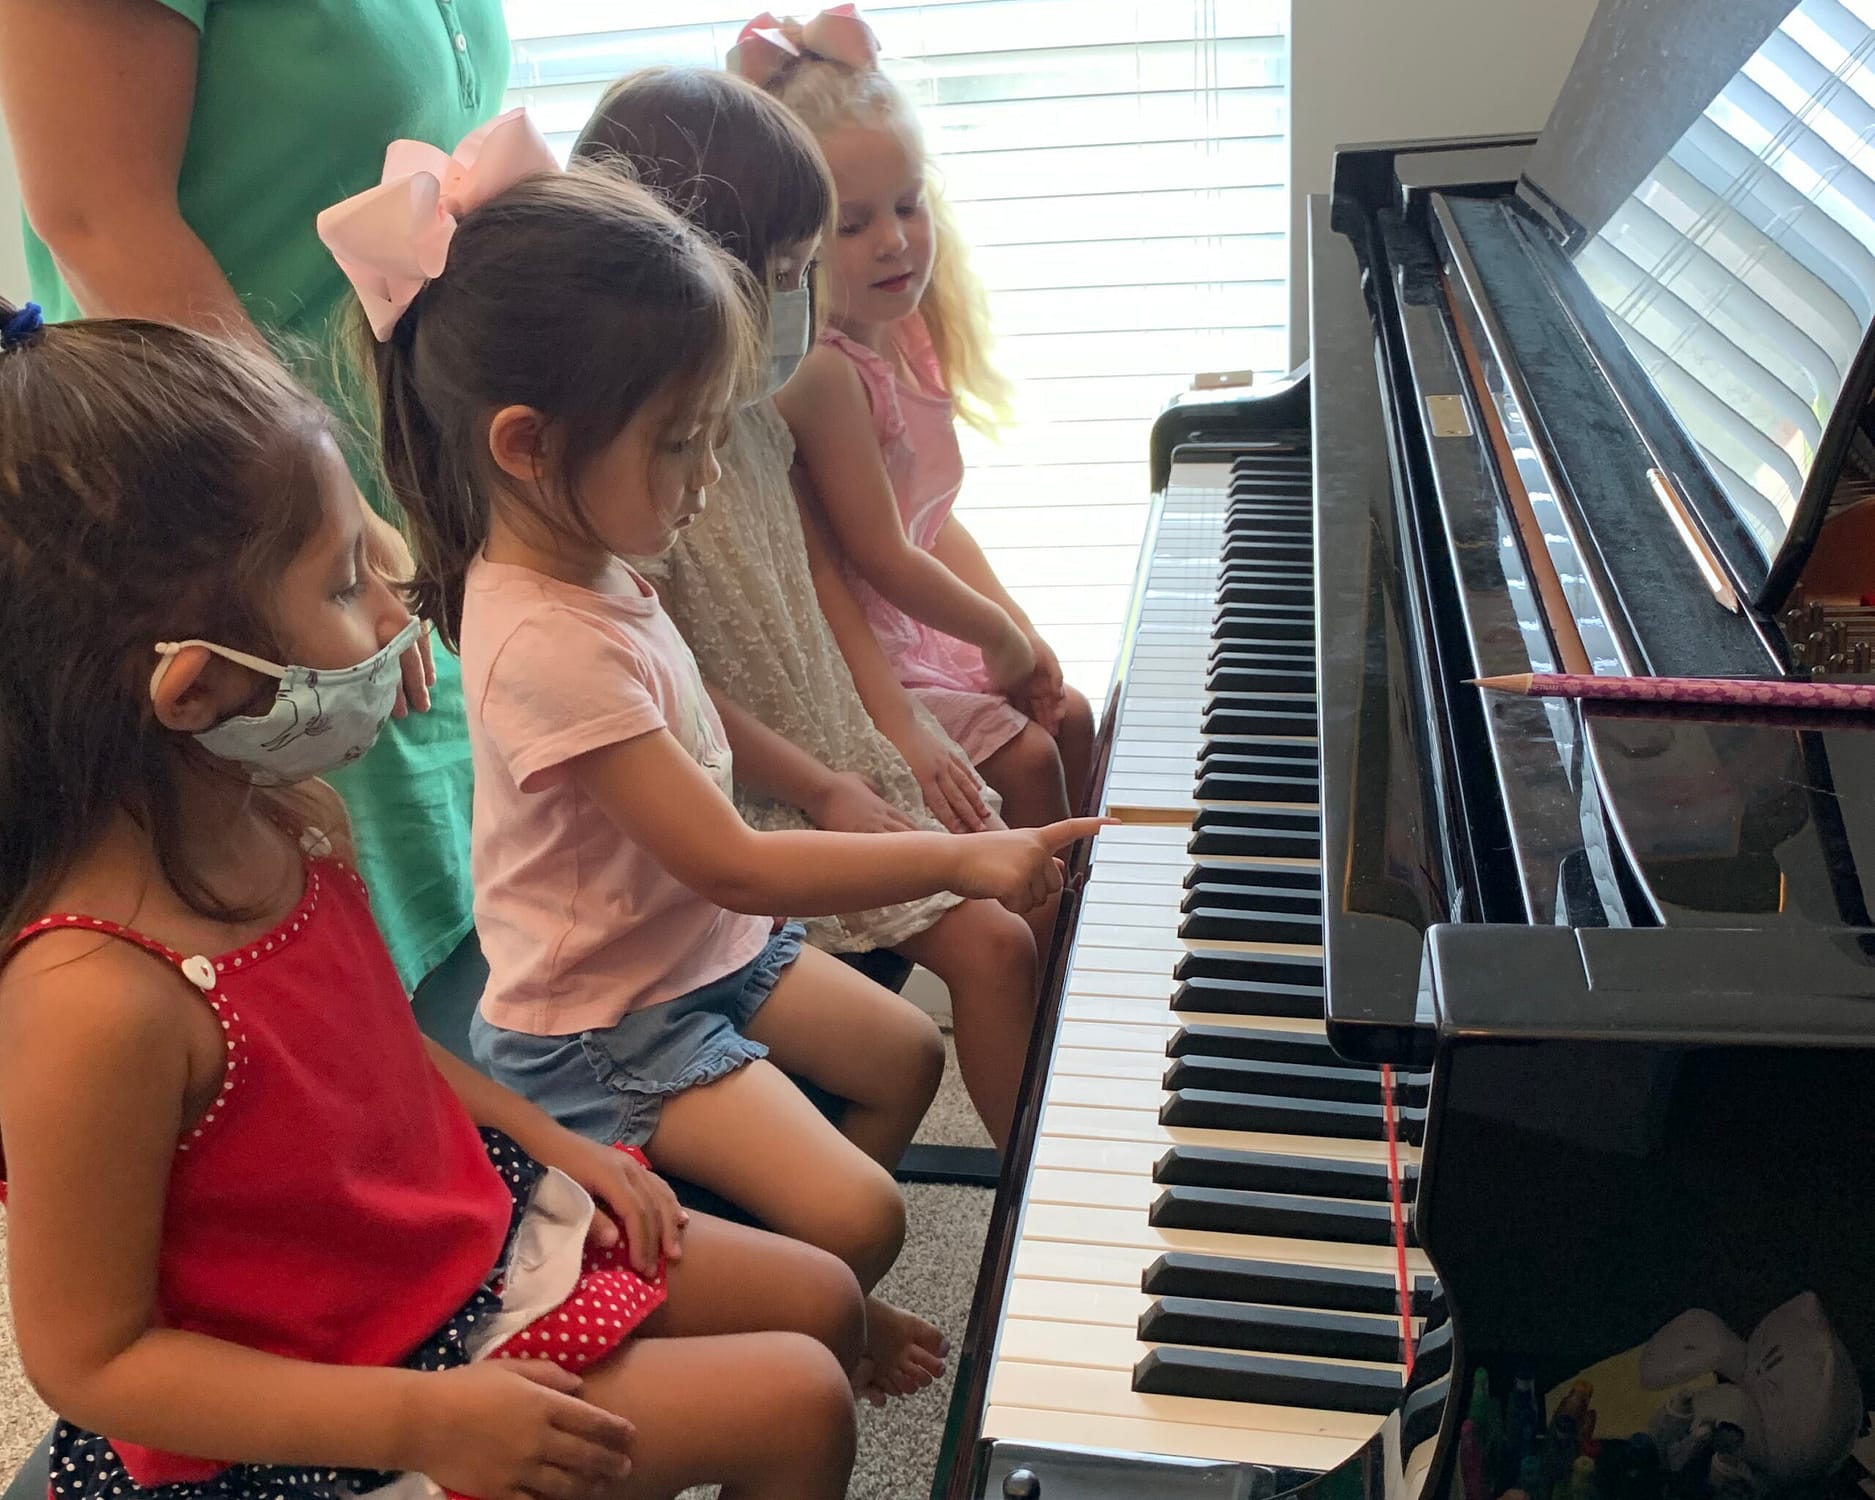 Preschool Piano Class